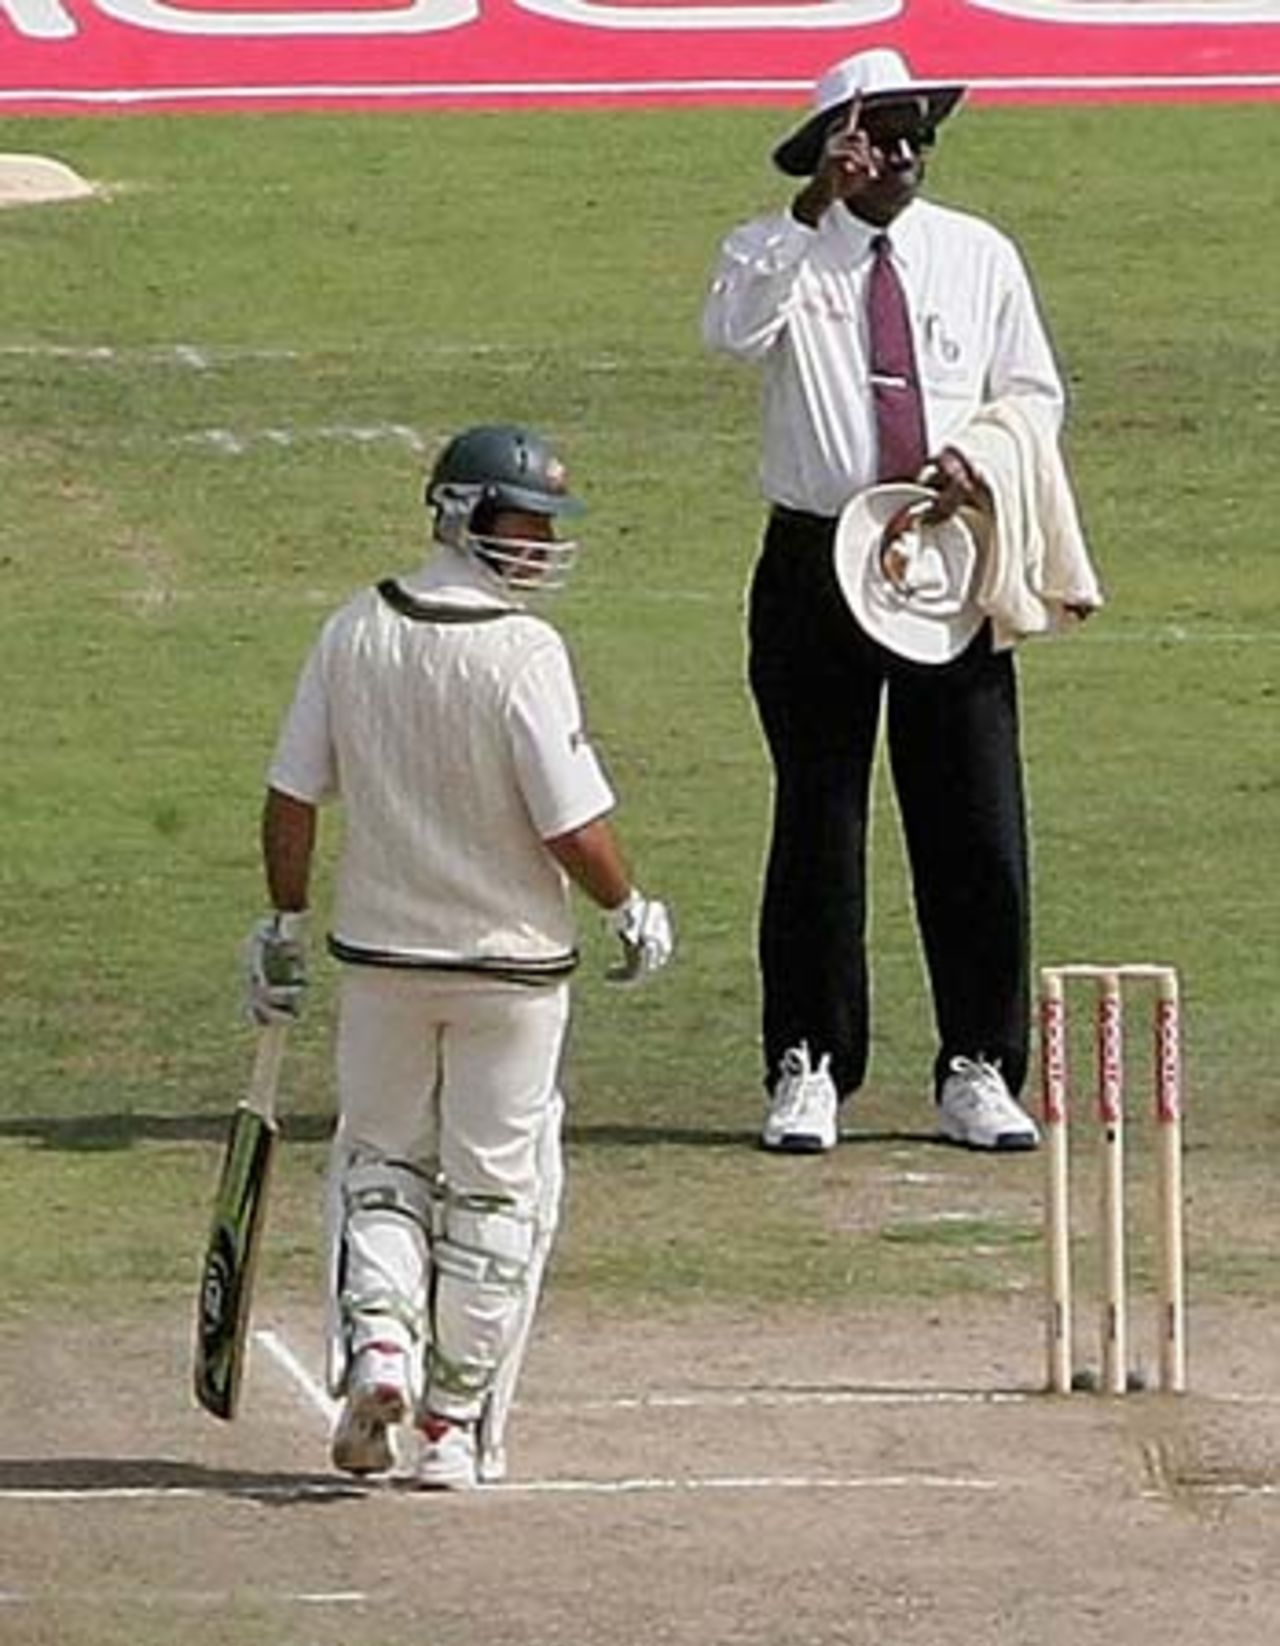 Human error: Steve Bucknor gives Damien Martyn lbw, England v Australia, 3rd Test, Old Trafford, August 15, 2005